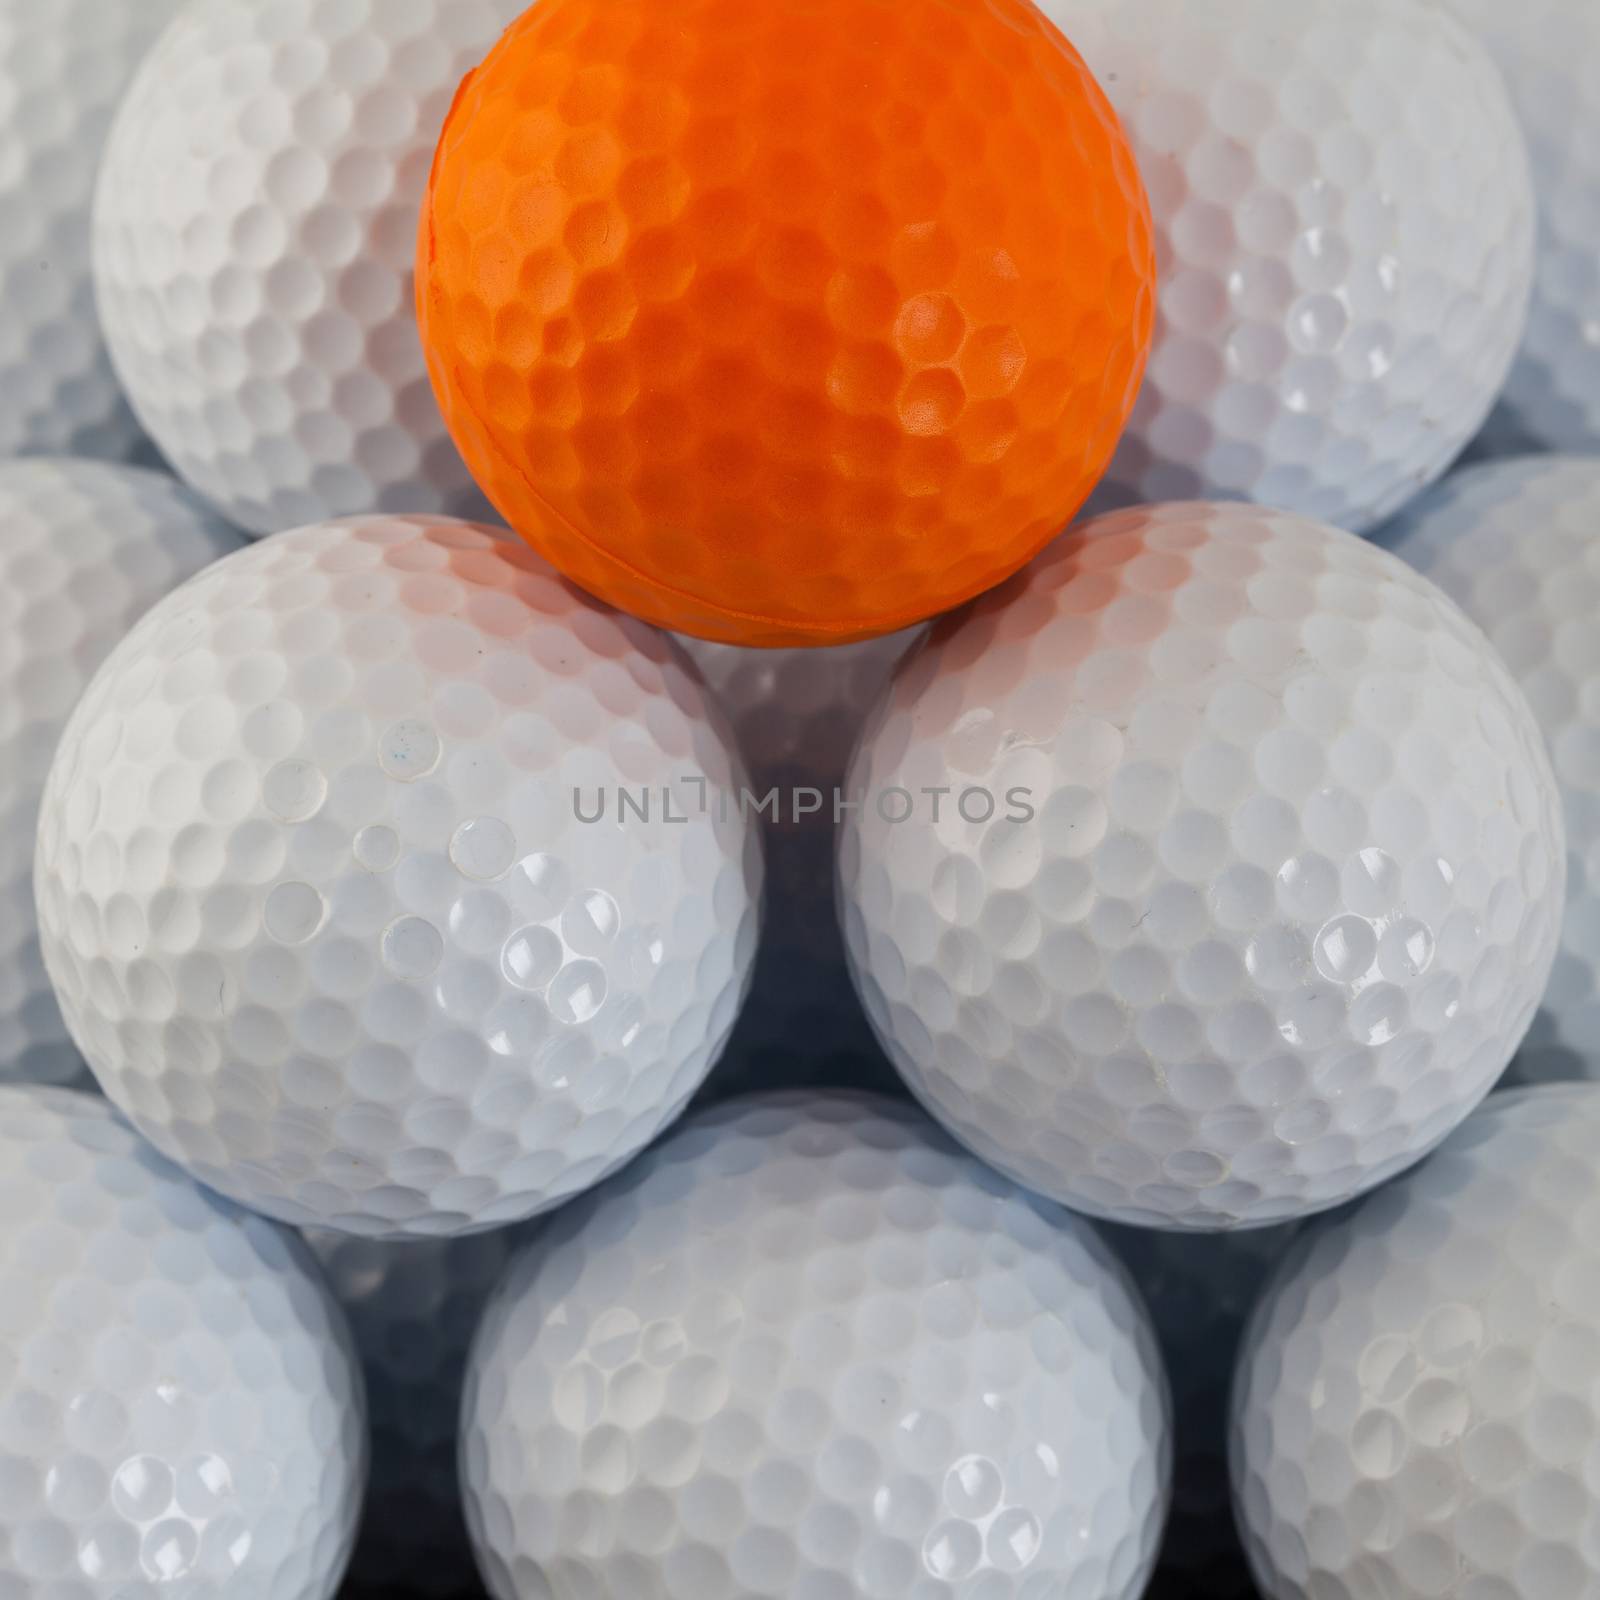 Pyramid of golf balls by CaptureLight